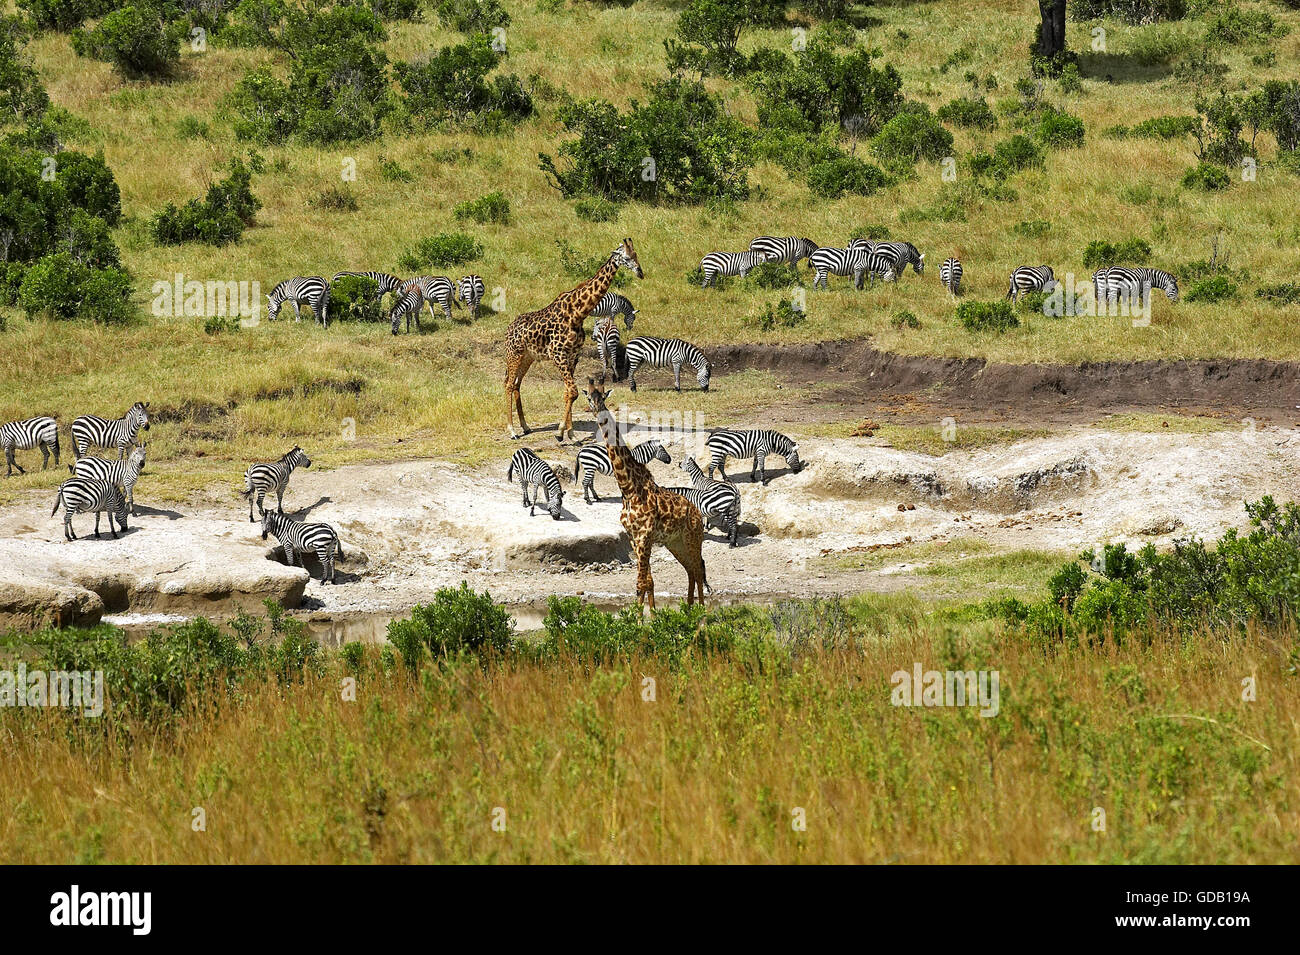 Rothschild de jirafas, giraffa camelopardalis rothschildi y Burchell, zebra Equus burchelli, rebaño de lamer la sal, el parque de Masai Mara en Kenya Foto de stock